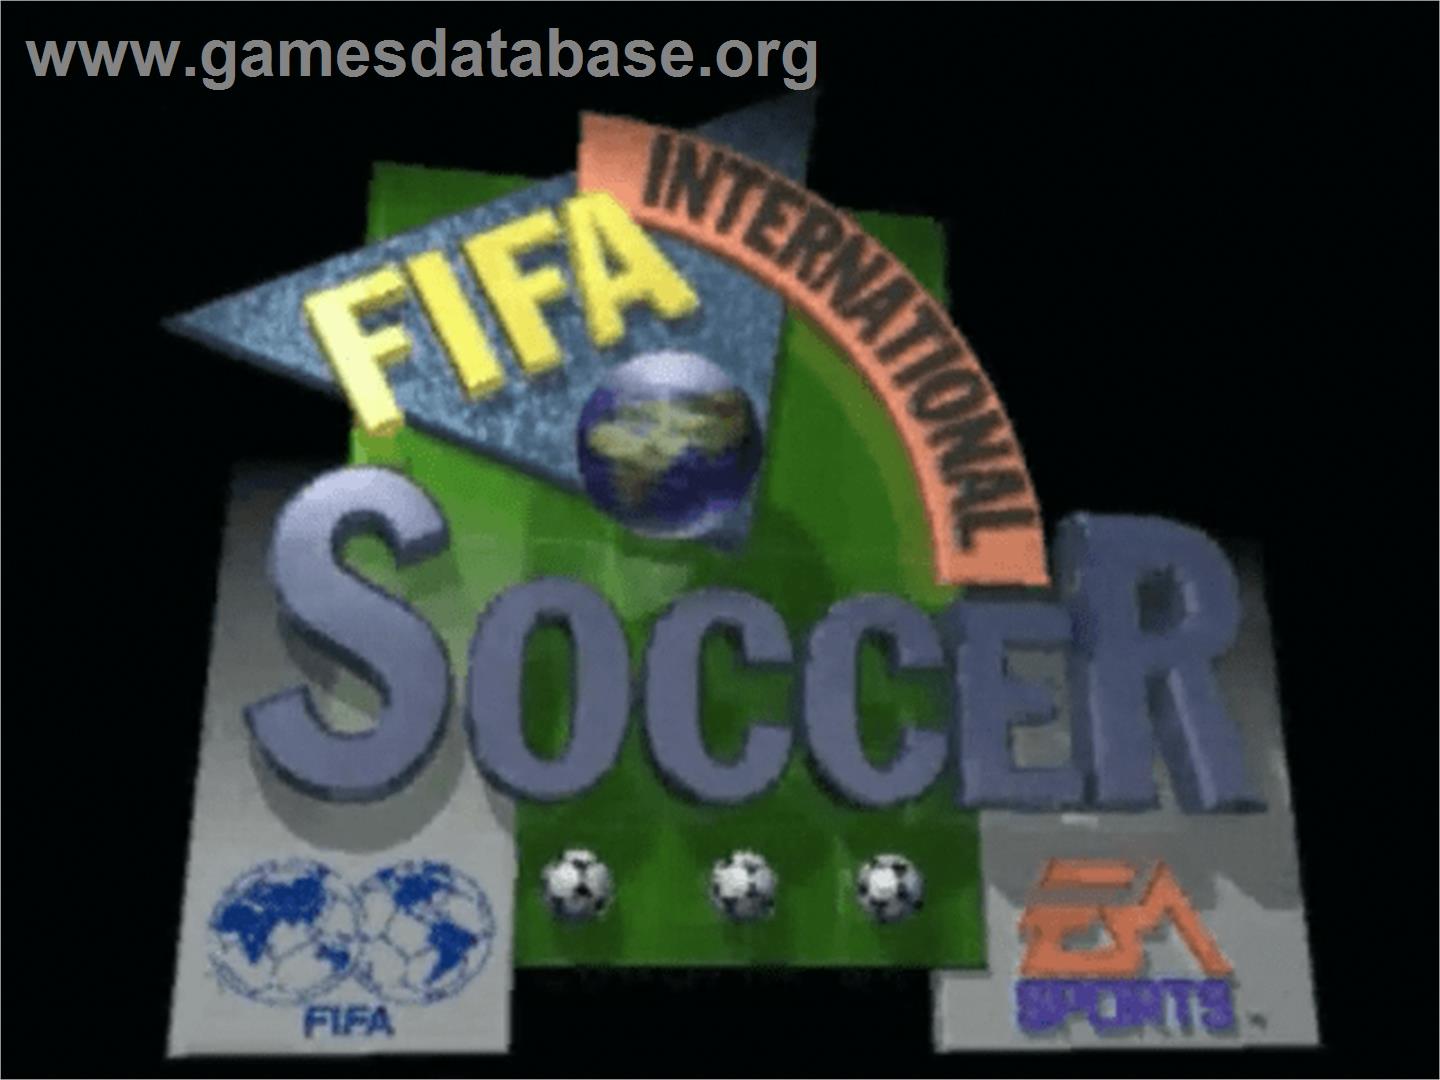 FIFA International Soccer - Panasonic 3DO - Artwork - Title Screen